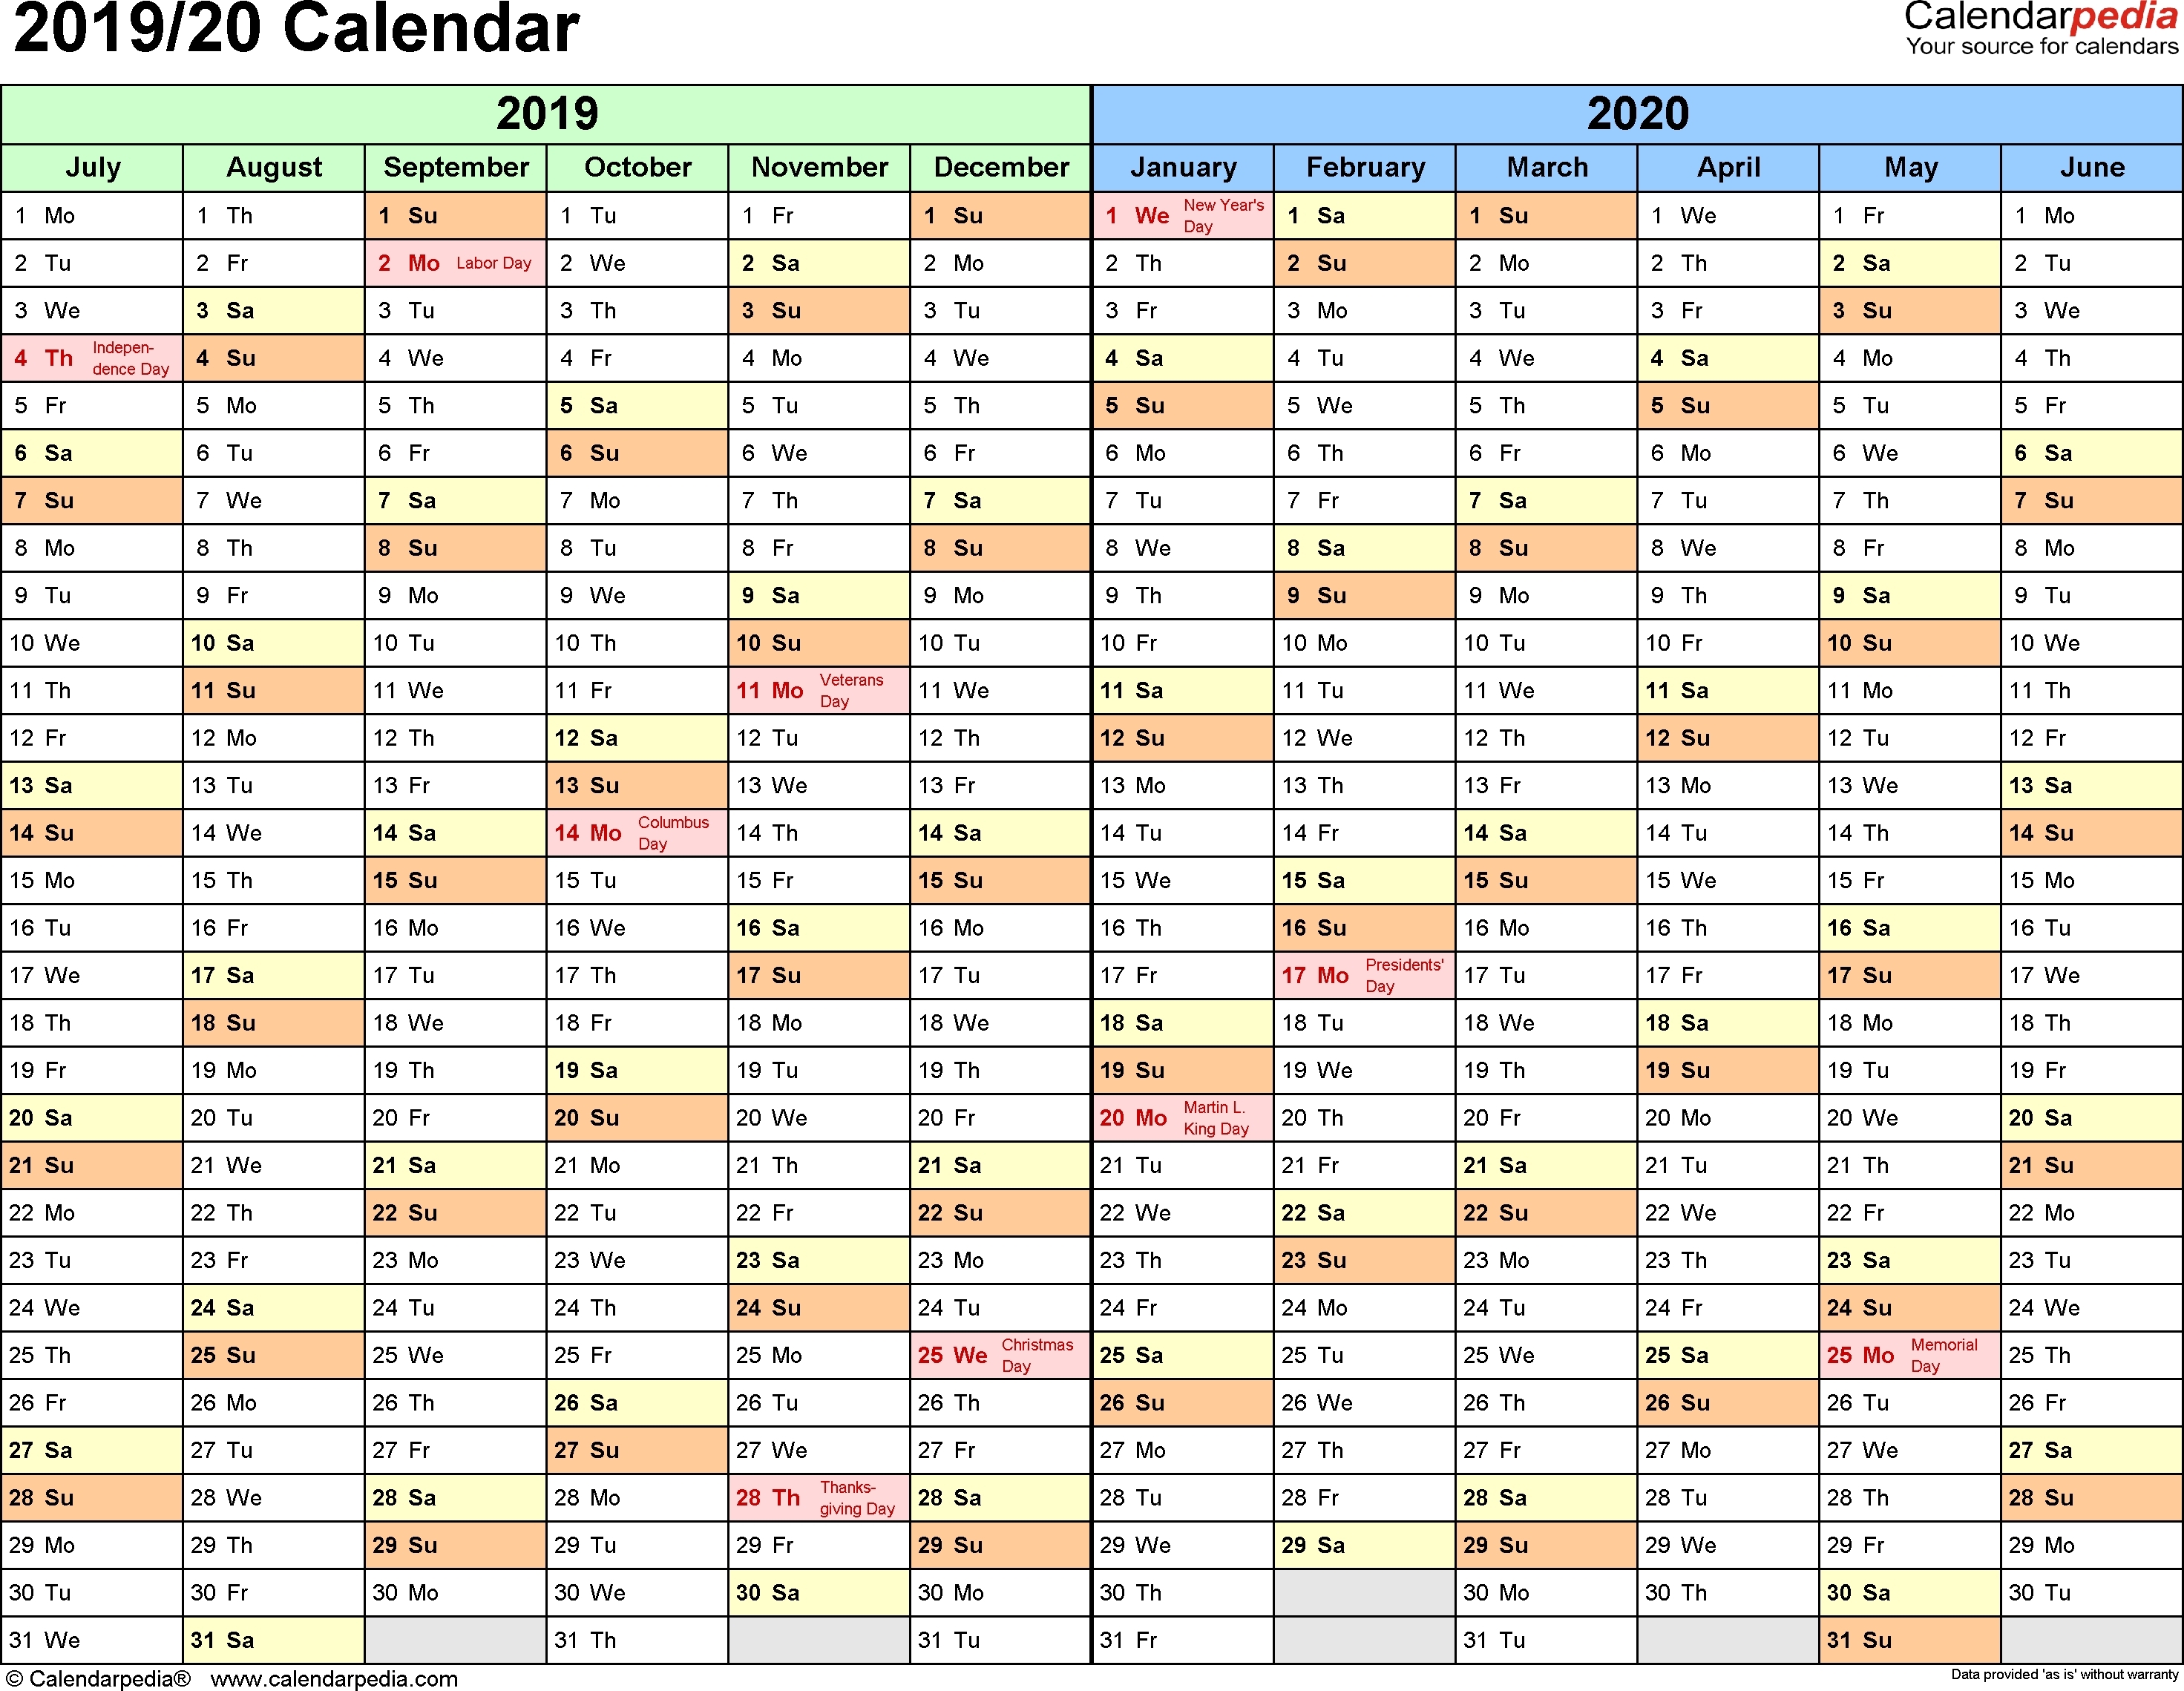 2019 2020 Financial Year Calendar - Calendar Inspiration Design Is Financial Year Extended To June 2020